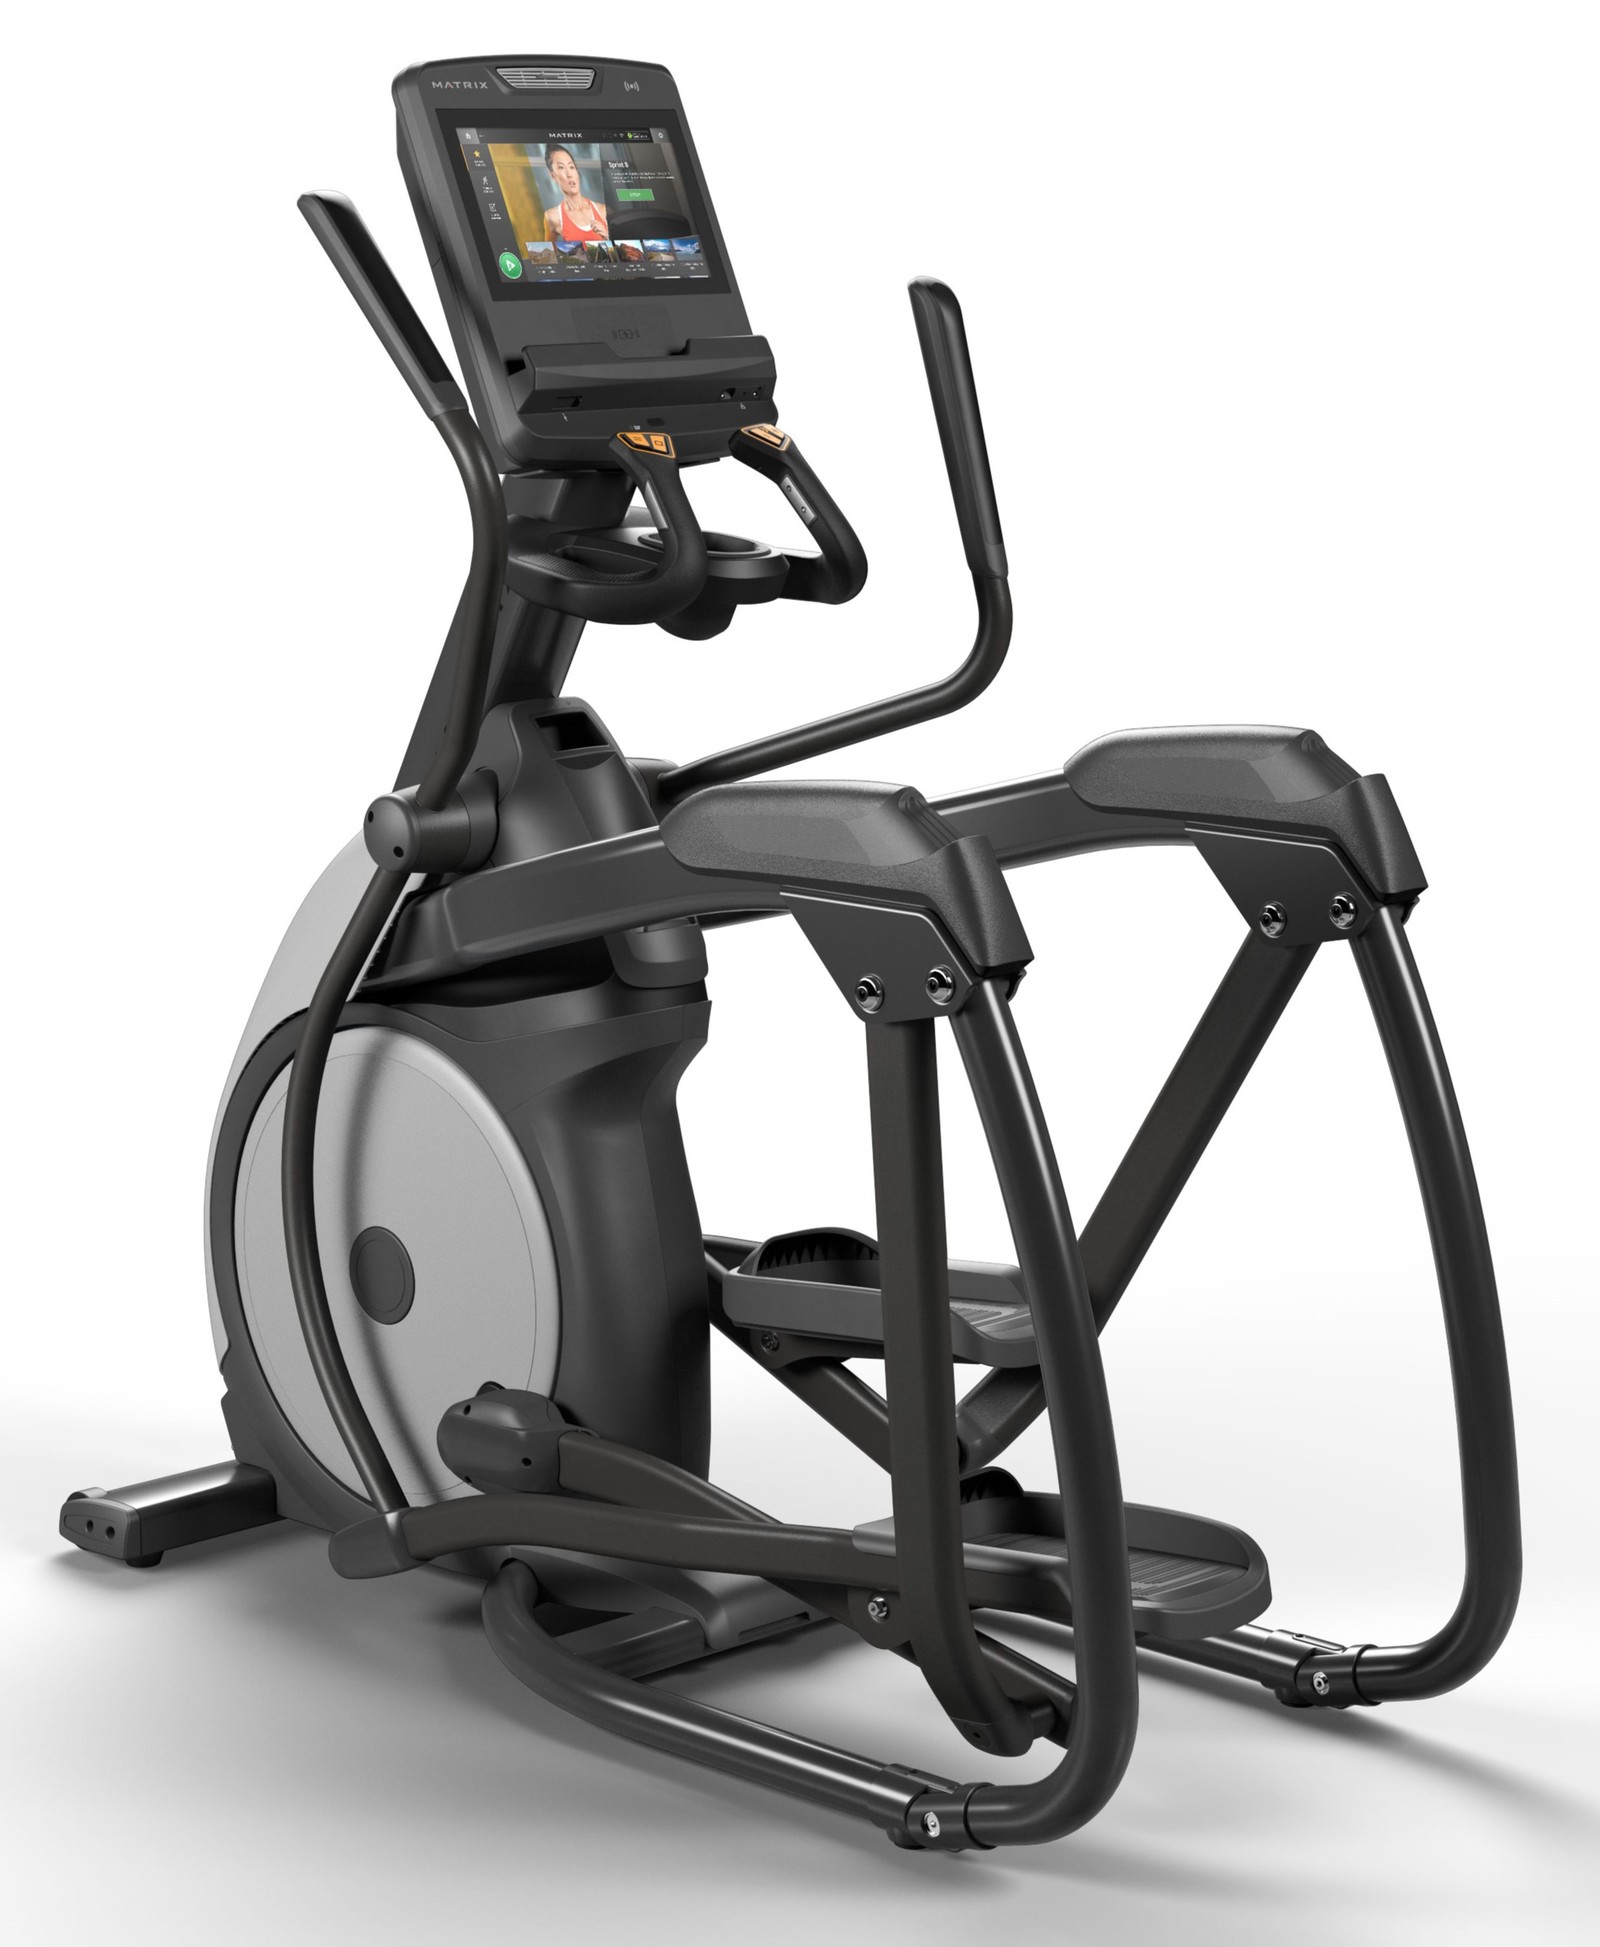 Эллиптический тренажер True Fitness C900 + консоль Envision preview 2